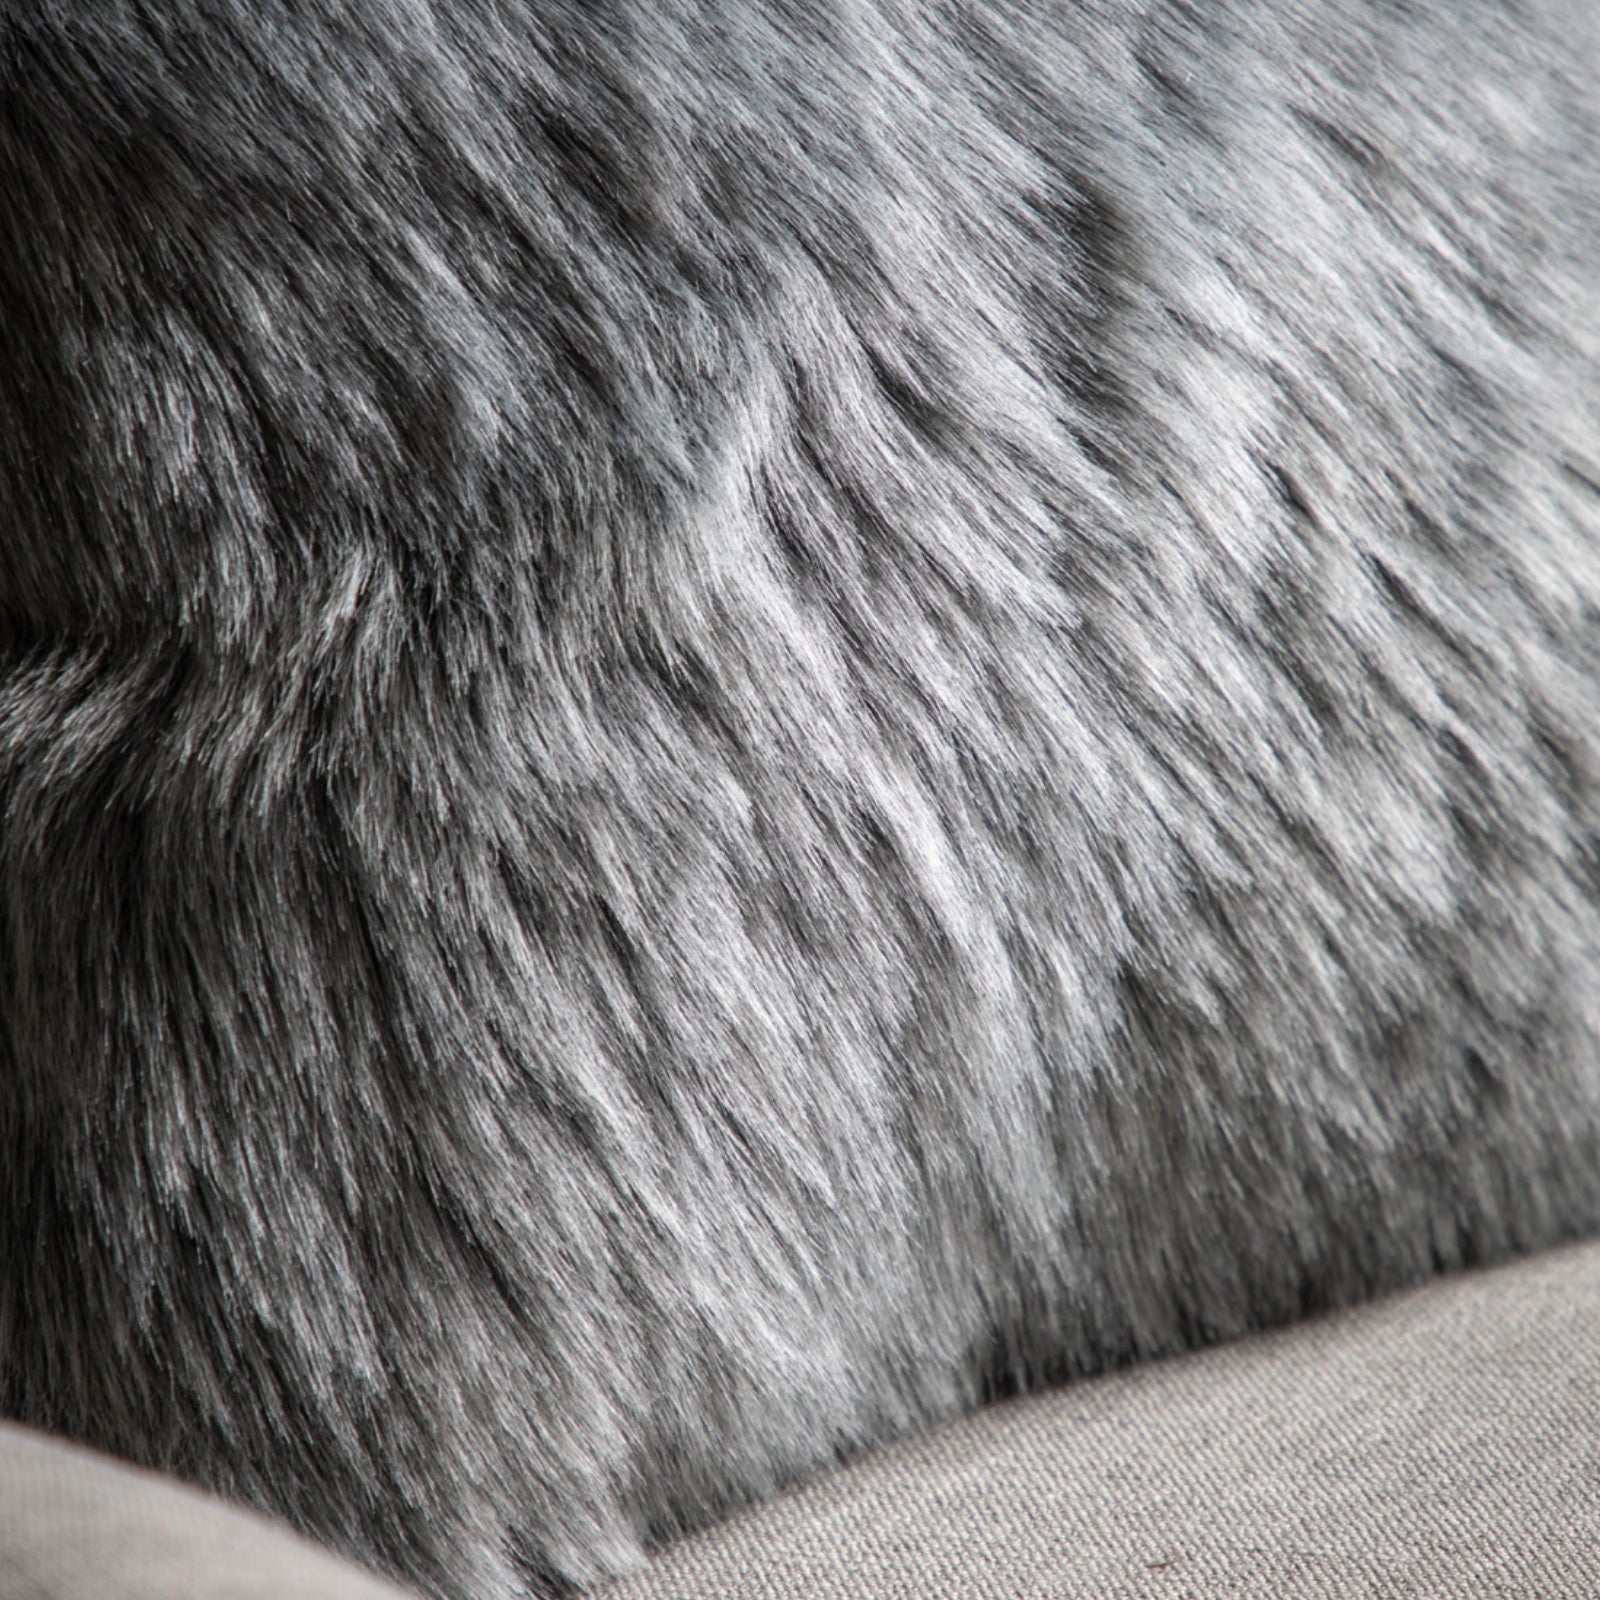 Super Soft Grey Faux Fur Cushion Cover - The Farthing